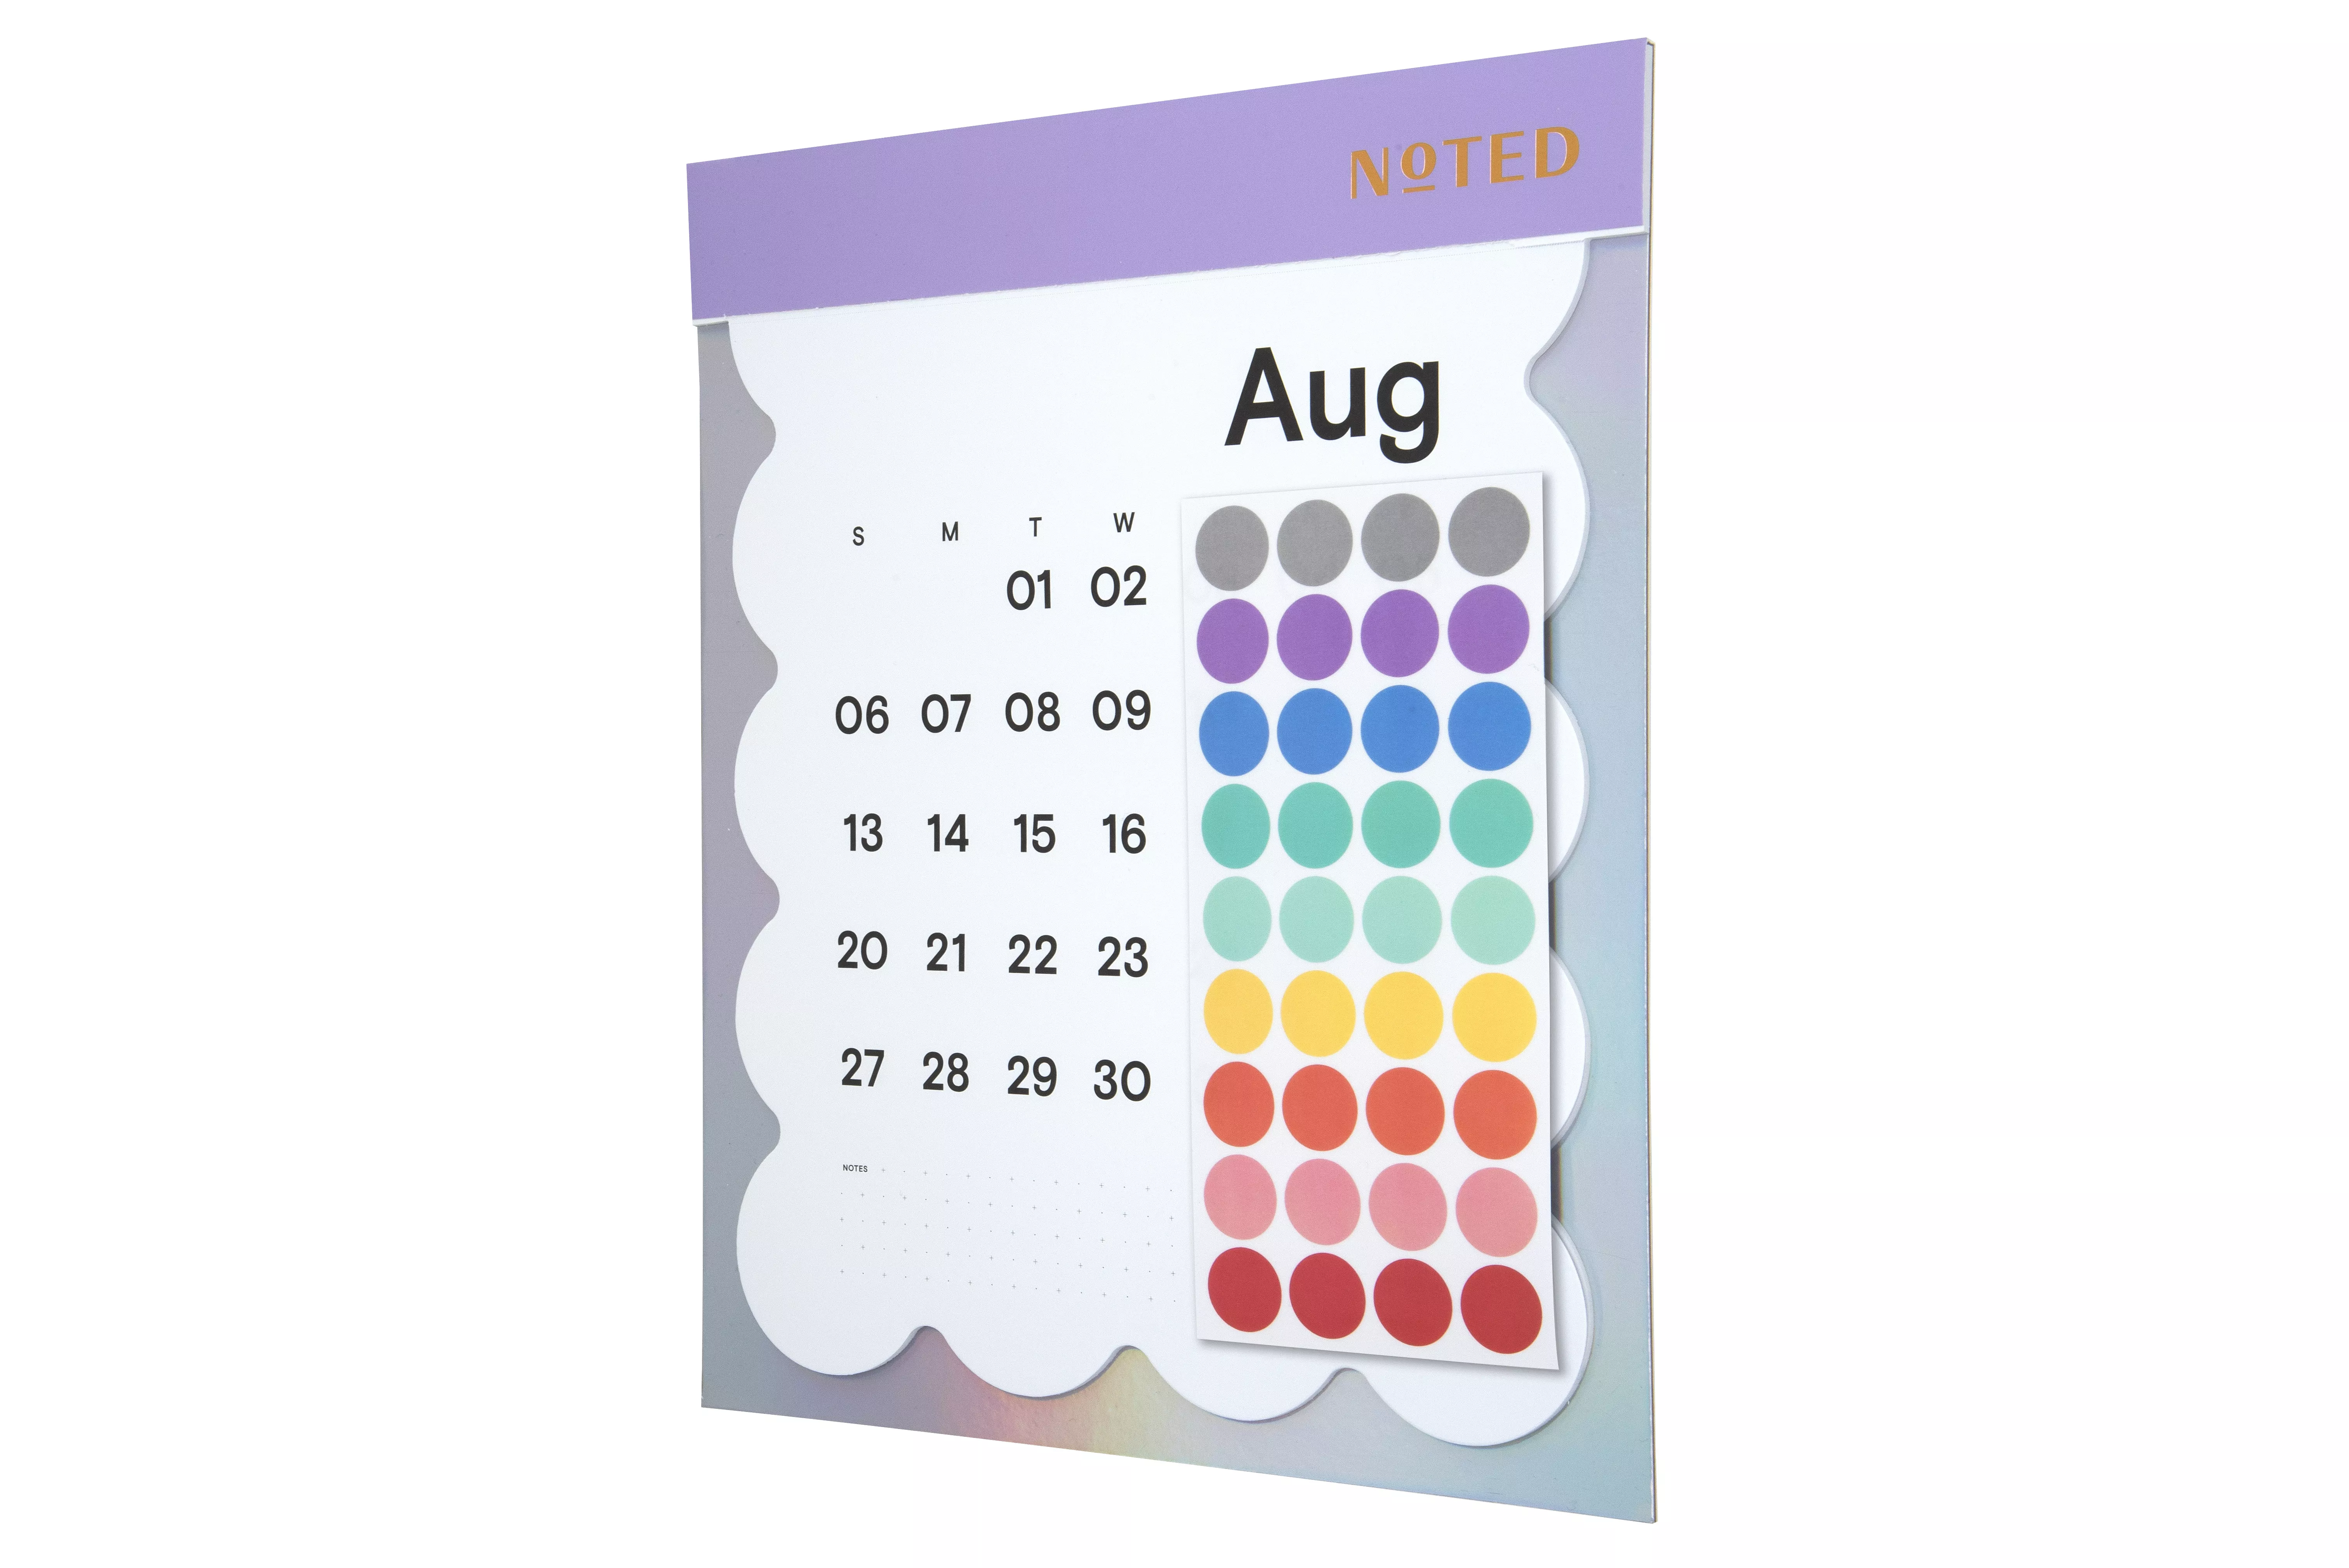 SKU 7100289222 | Post-it® Wall Calendar with Planner Dots NTD7-CAL-1